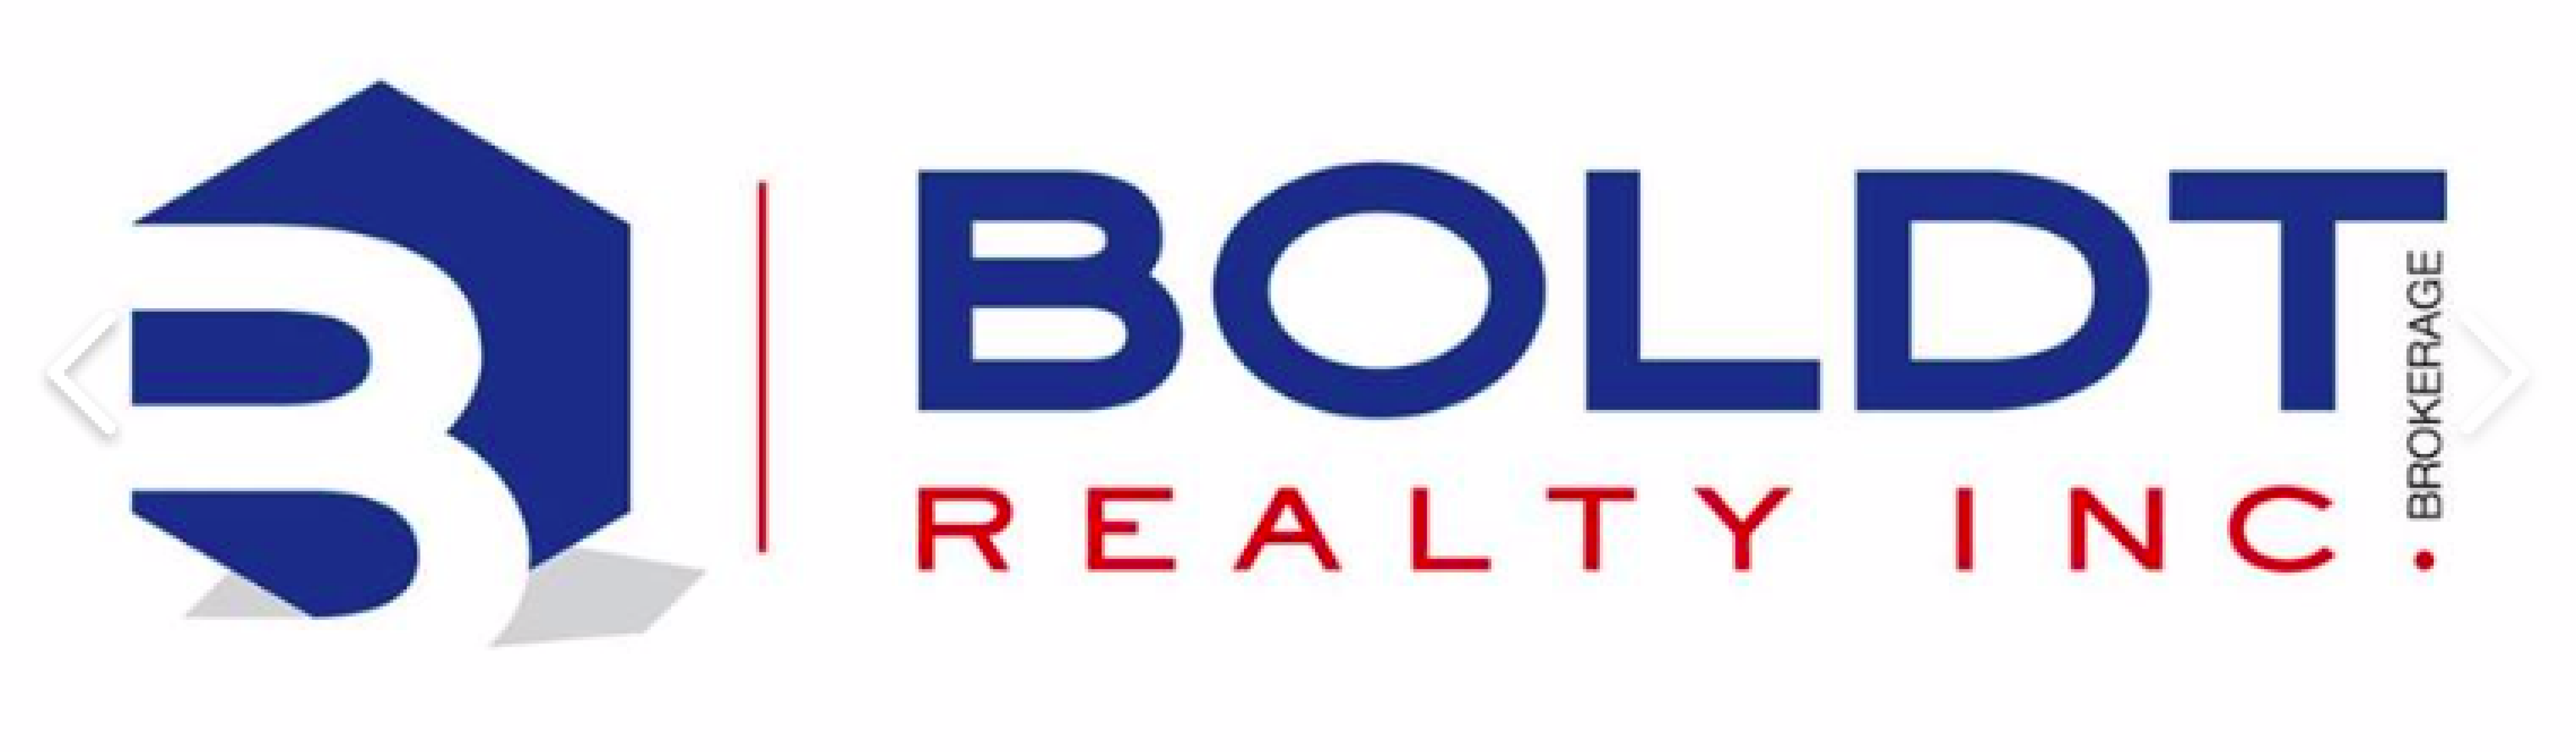 Boldt Realty Inc. Brokerage (Bronze Level Sponsor)